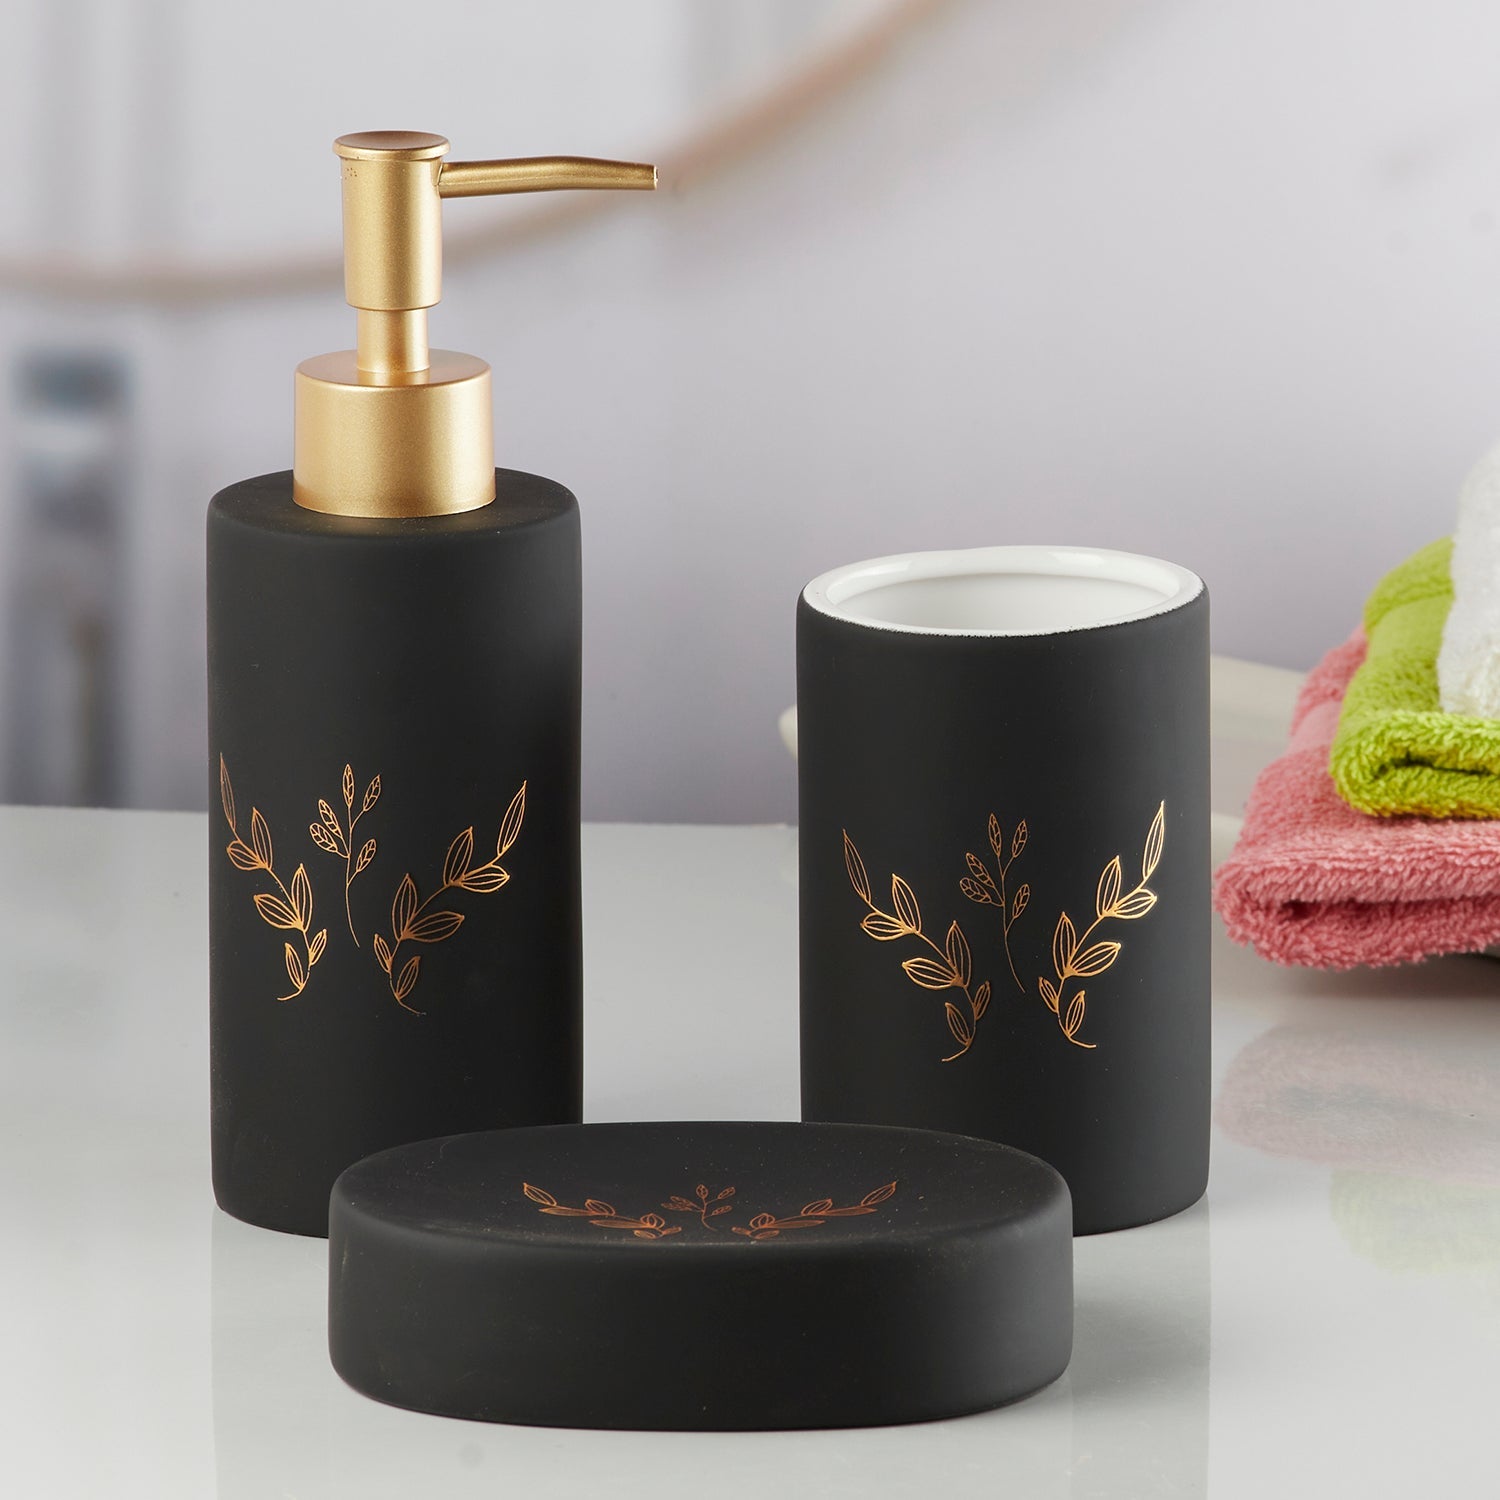 Ceramic Bathroom Accessories Set of 3 Bath Set with Soap Dispenser (7644)